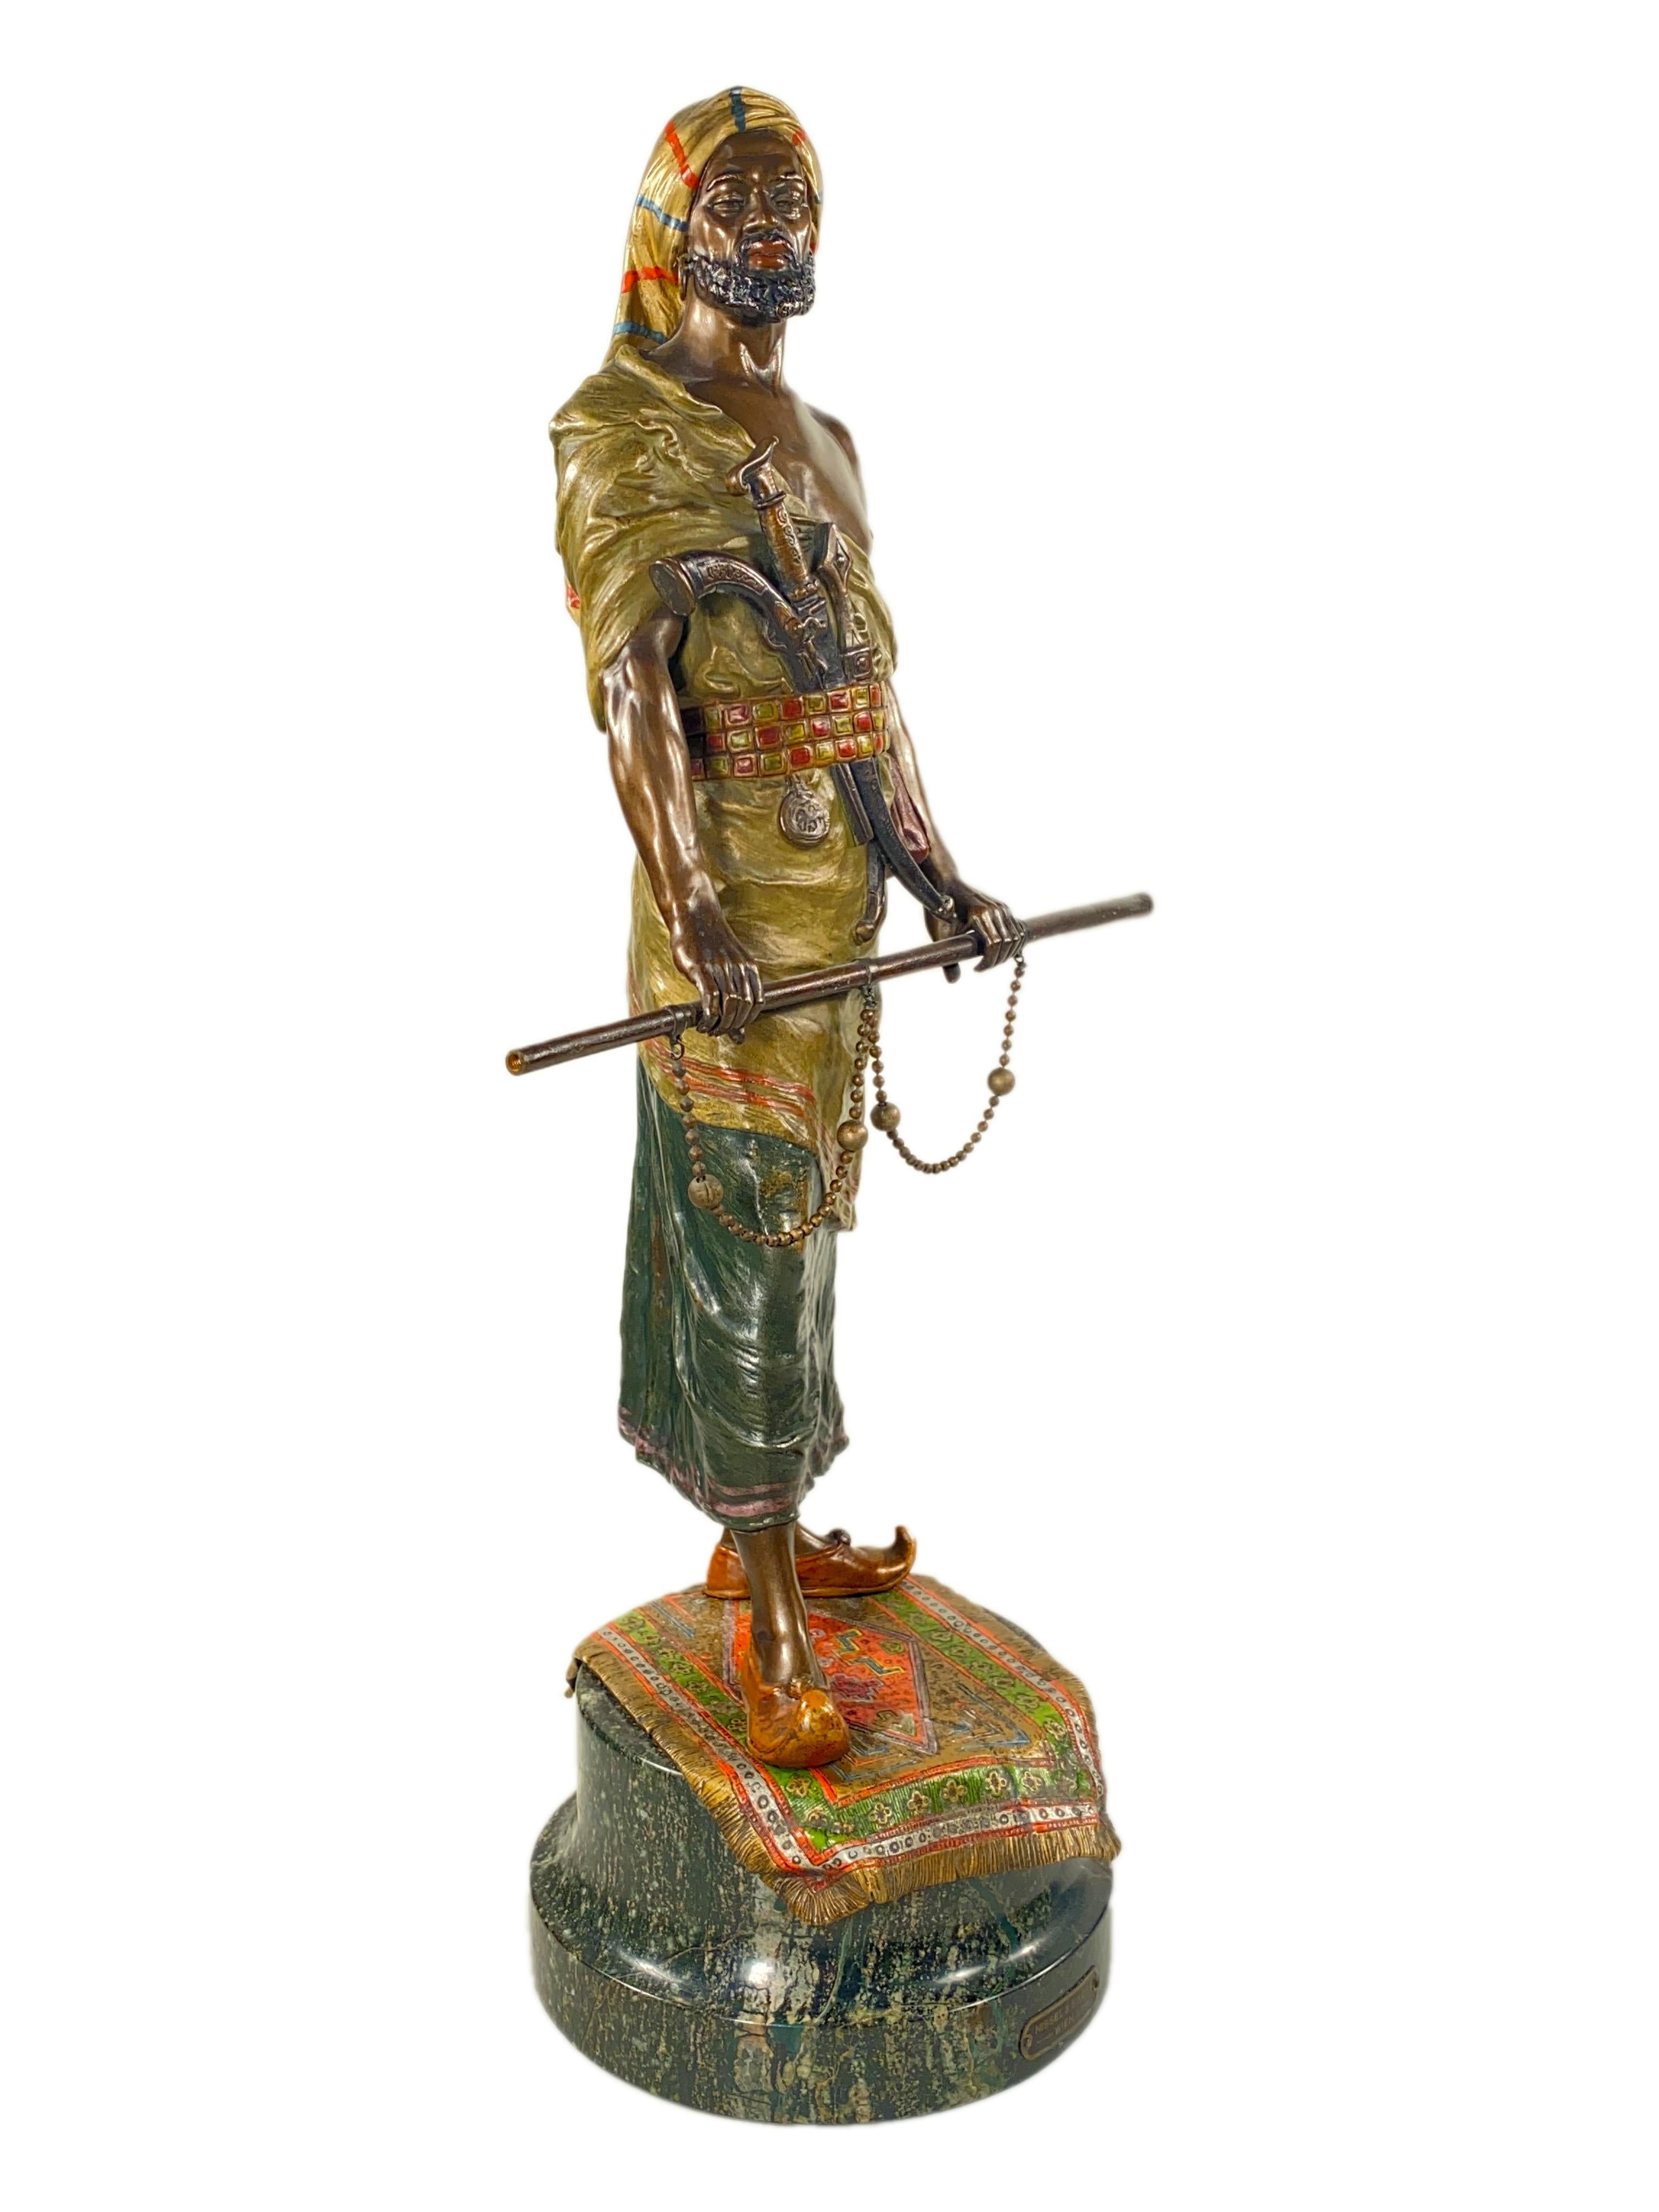 Cold-Painted Austrian Art Nouveau Bronze Orientalist Sculpture of an Arab Warrior